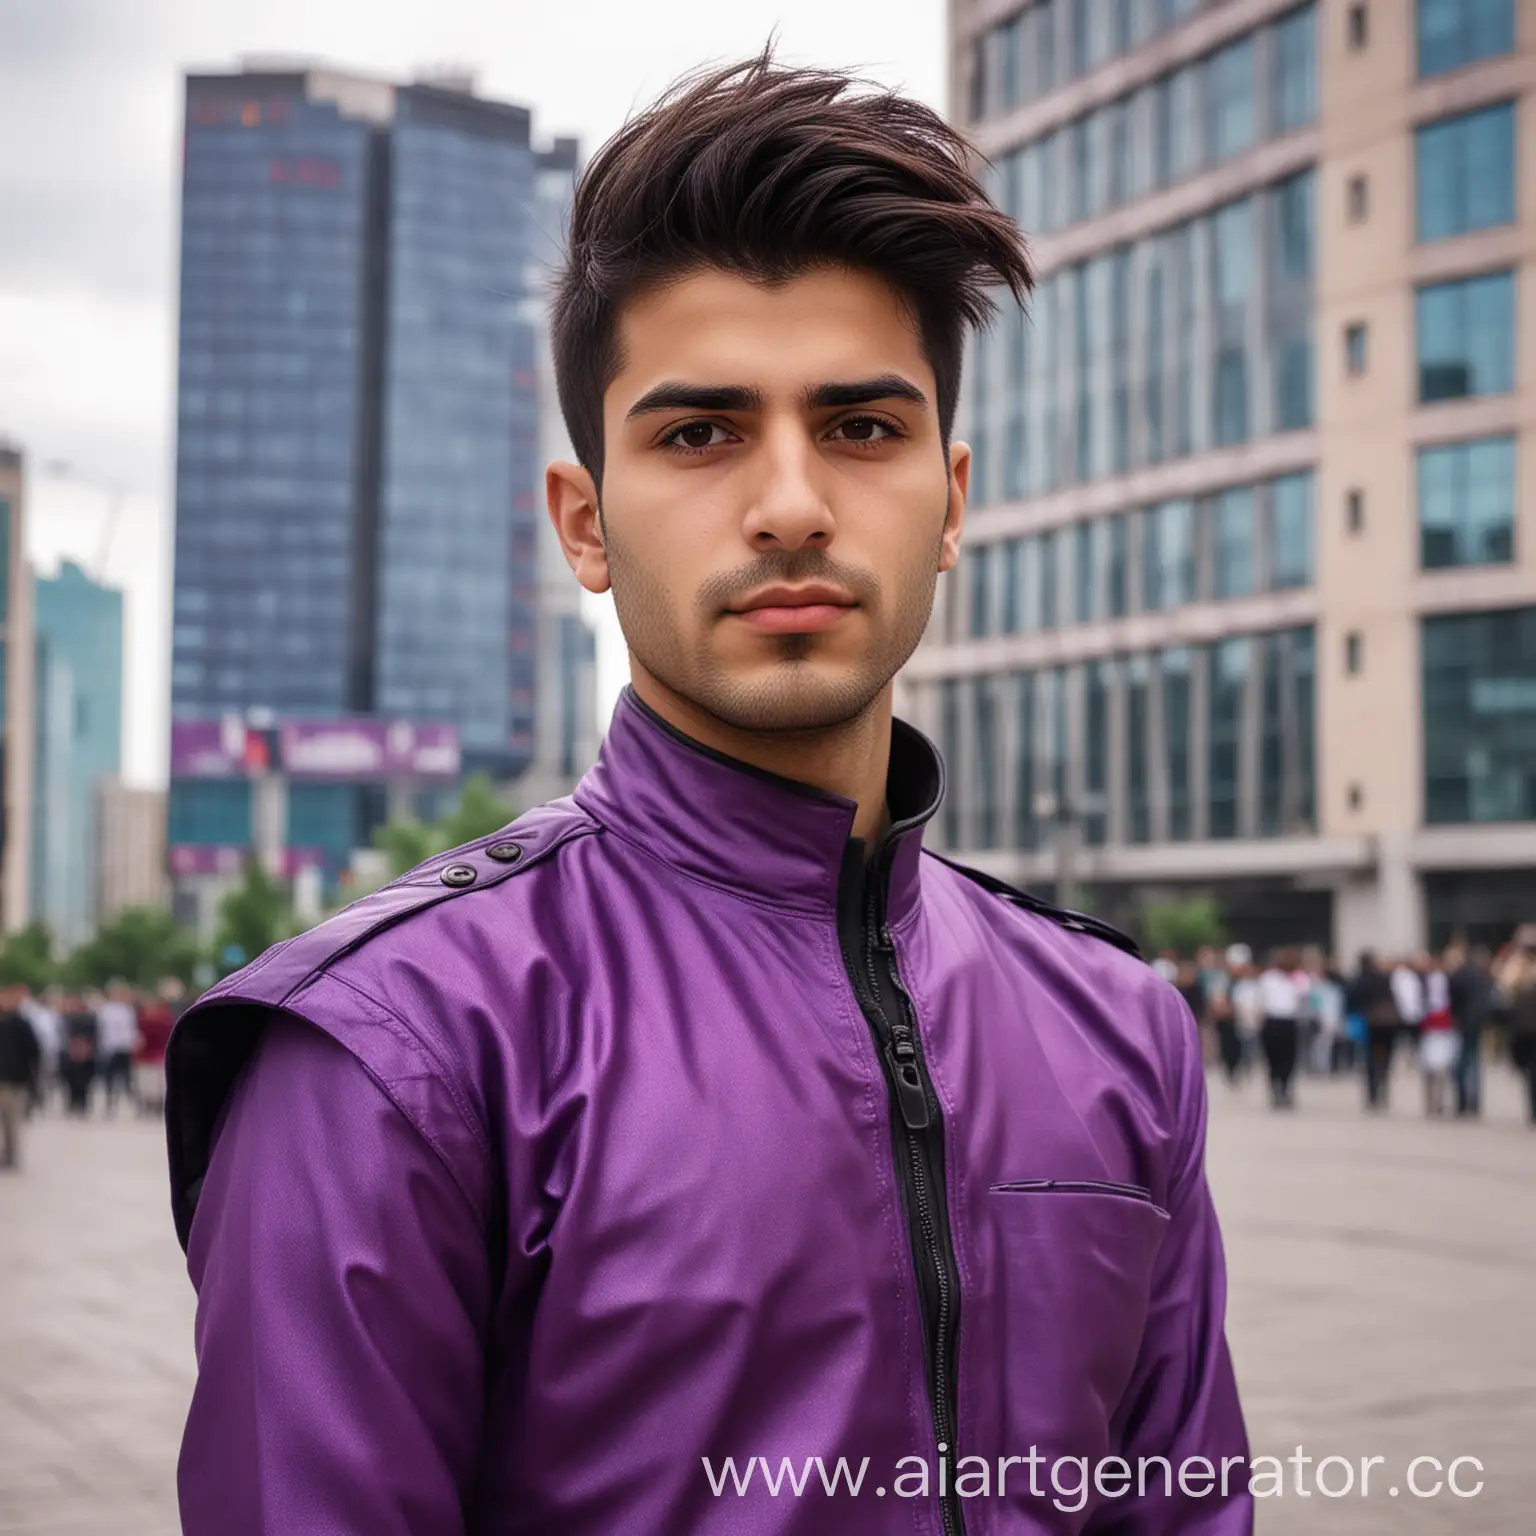 Stylish-Young-Kurd-in-Futuristic-Purple-Attire-amidst-Urban-Ambiance